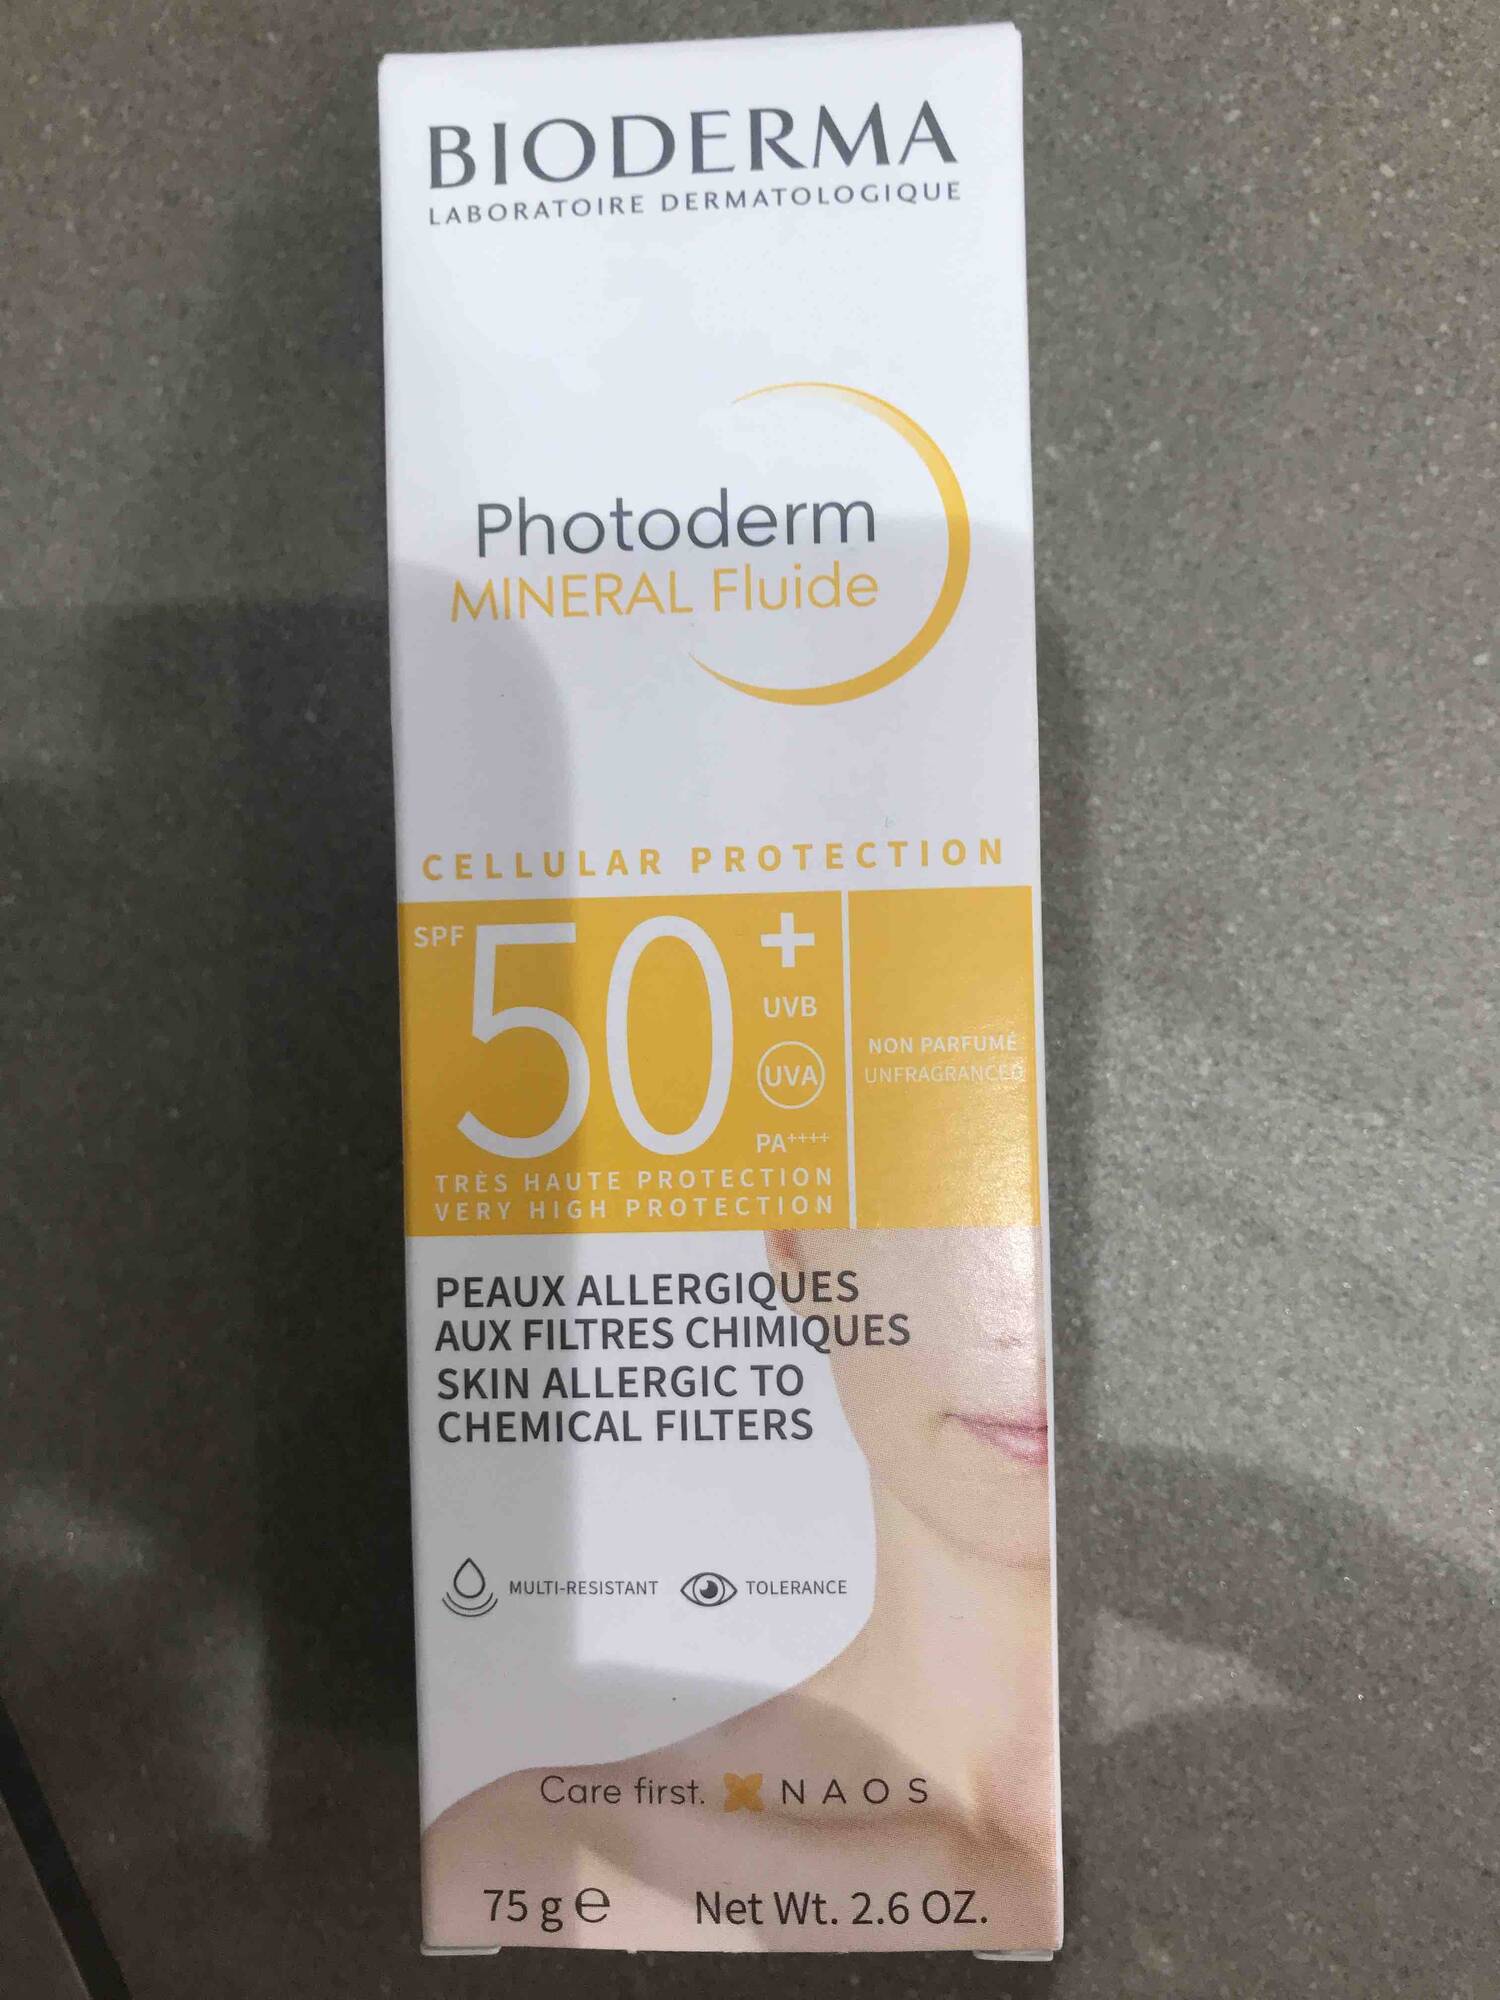 BIODERMA - Photoderm mineral fluide - Cellular protection SPF 50+